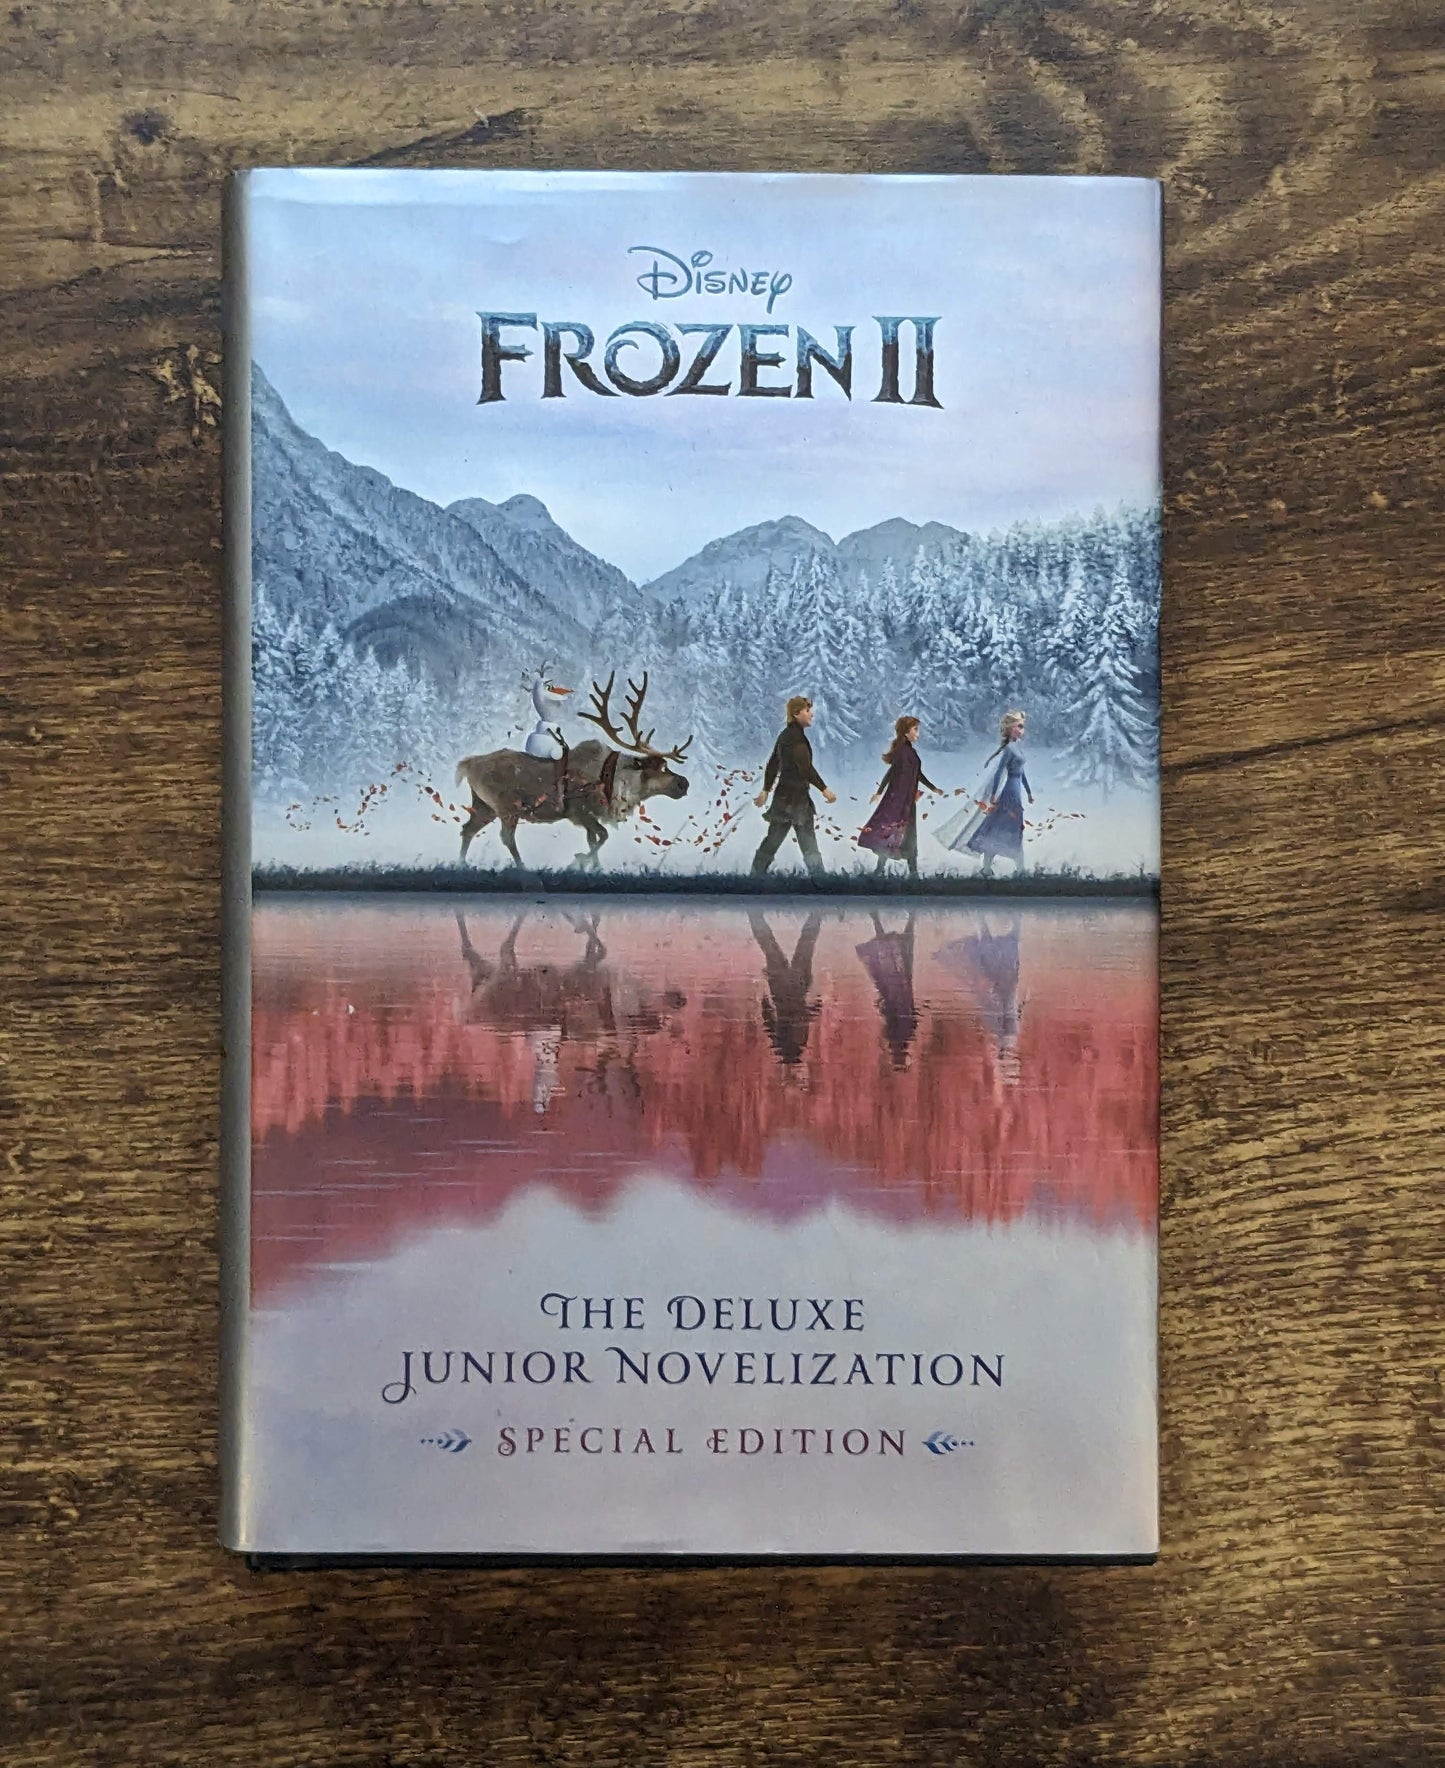 Frozen II (Deluxe Junior Novelization) Special Edition by David Blaze - Hardcover - Asylum Books